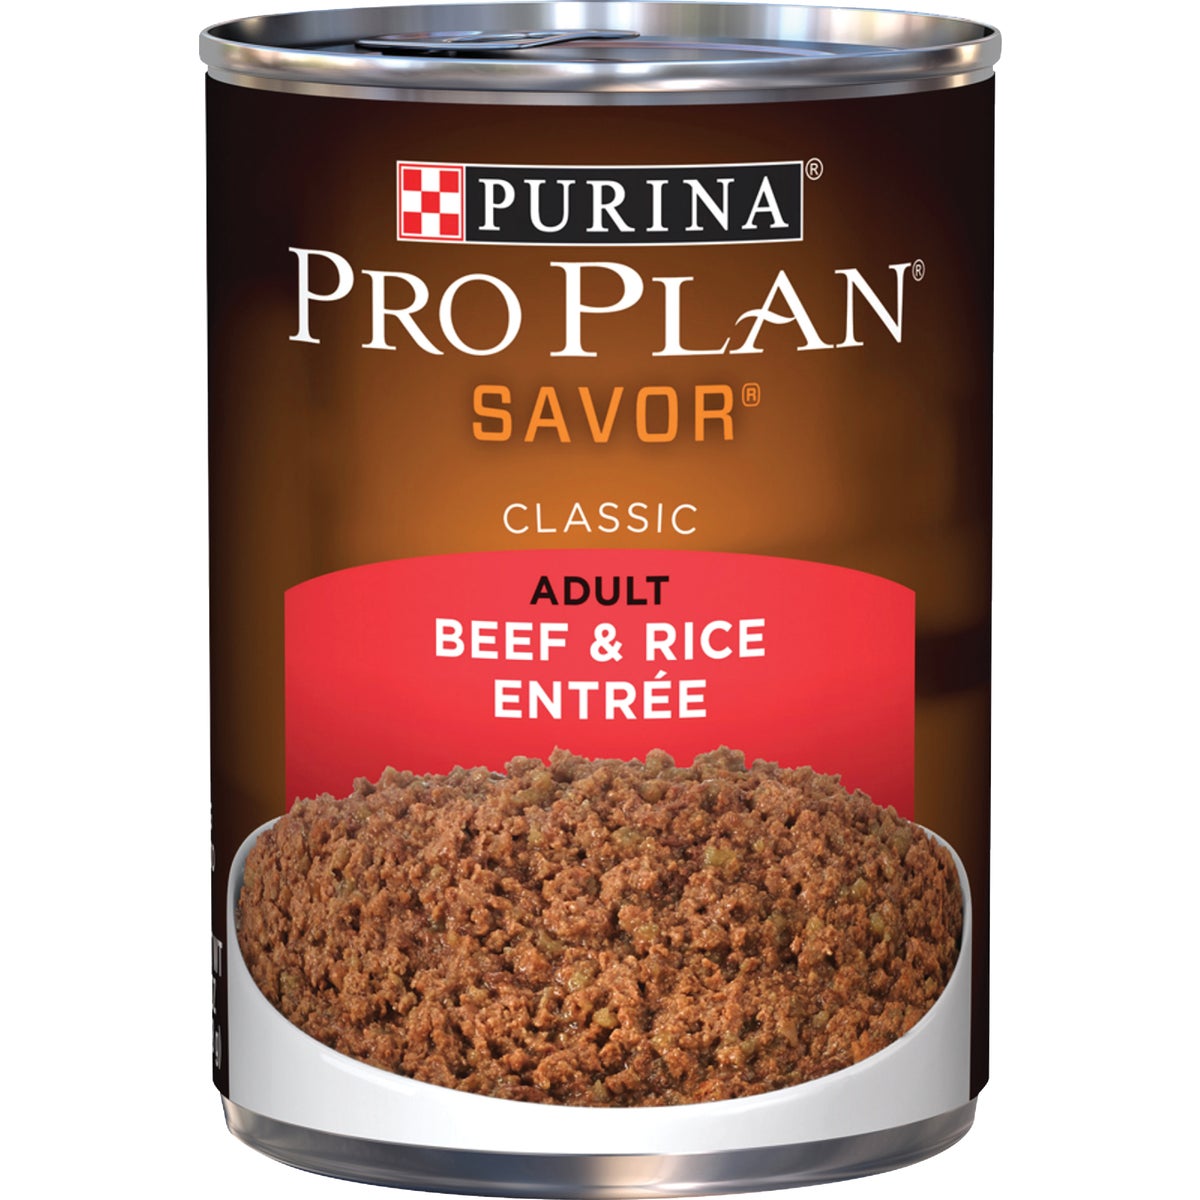 Purina Pro Plan Savor Beef & Rice Adult Wet Dog Food, 13 Oz.